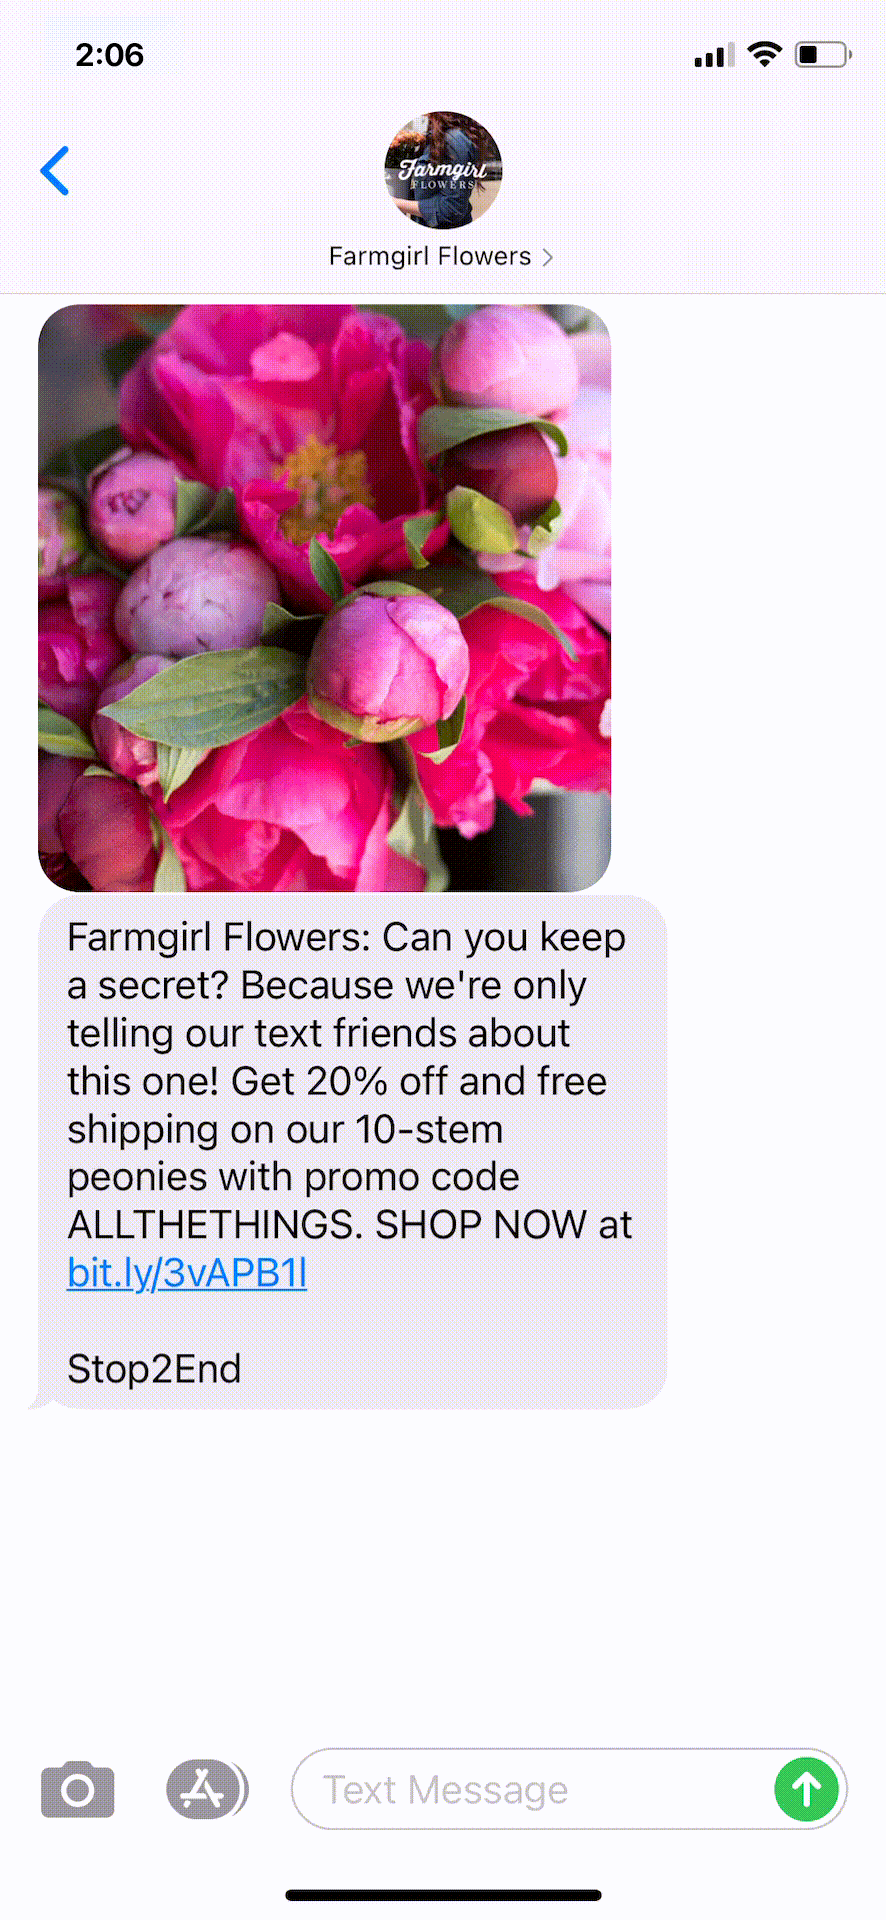 Farmgirl-Flowers-Text-Message-Marketing-Example-05.28.2021